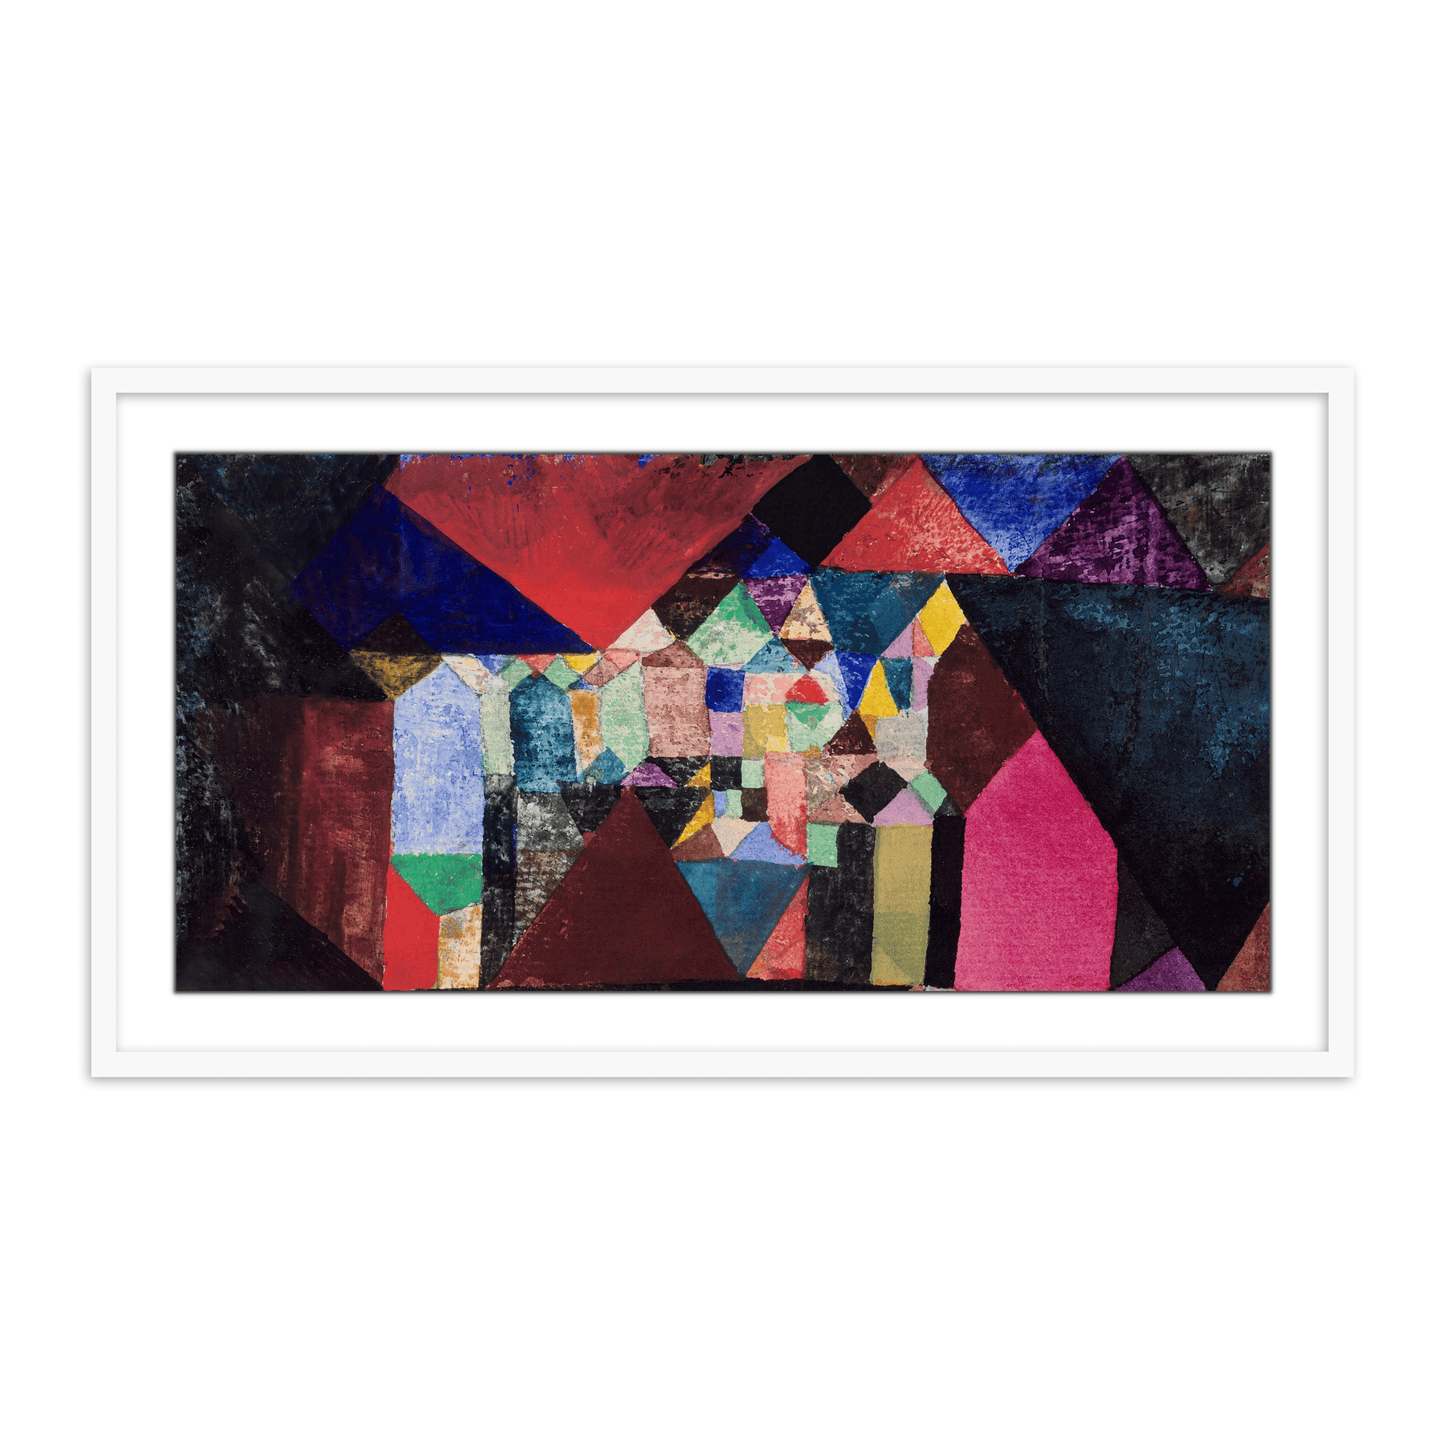 Municipal Jewel by Paul Klee